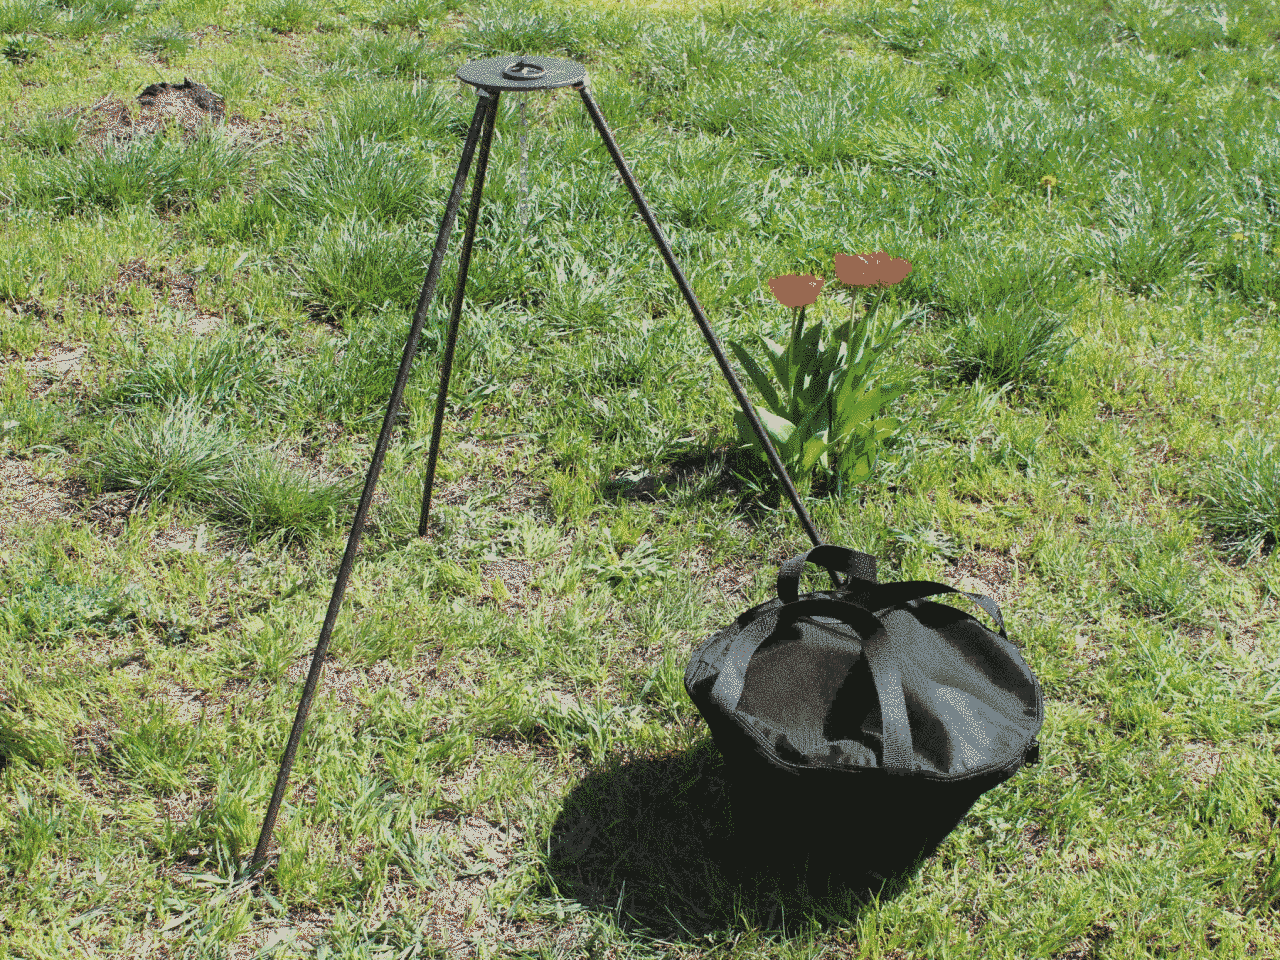 Cast iron asian cauldron 15 L with a bag and a tripod